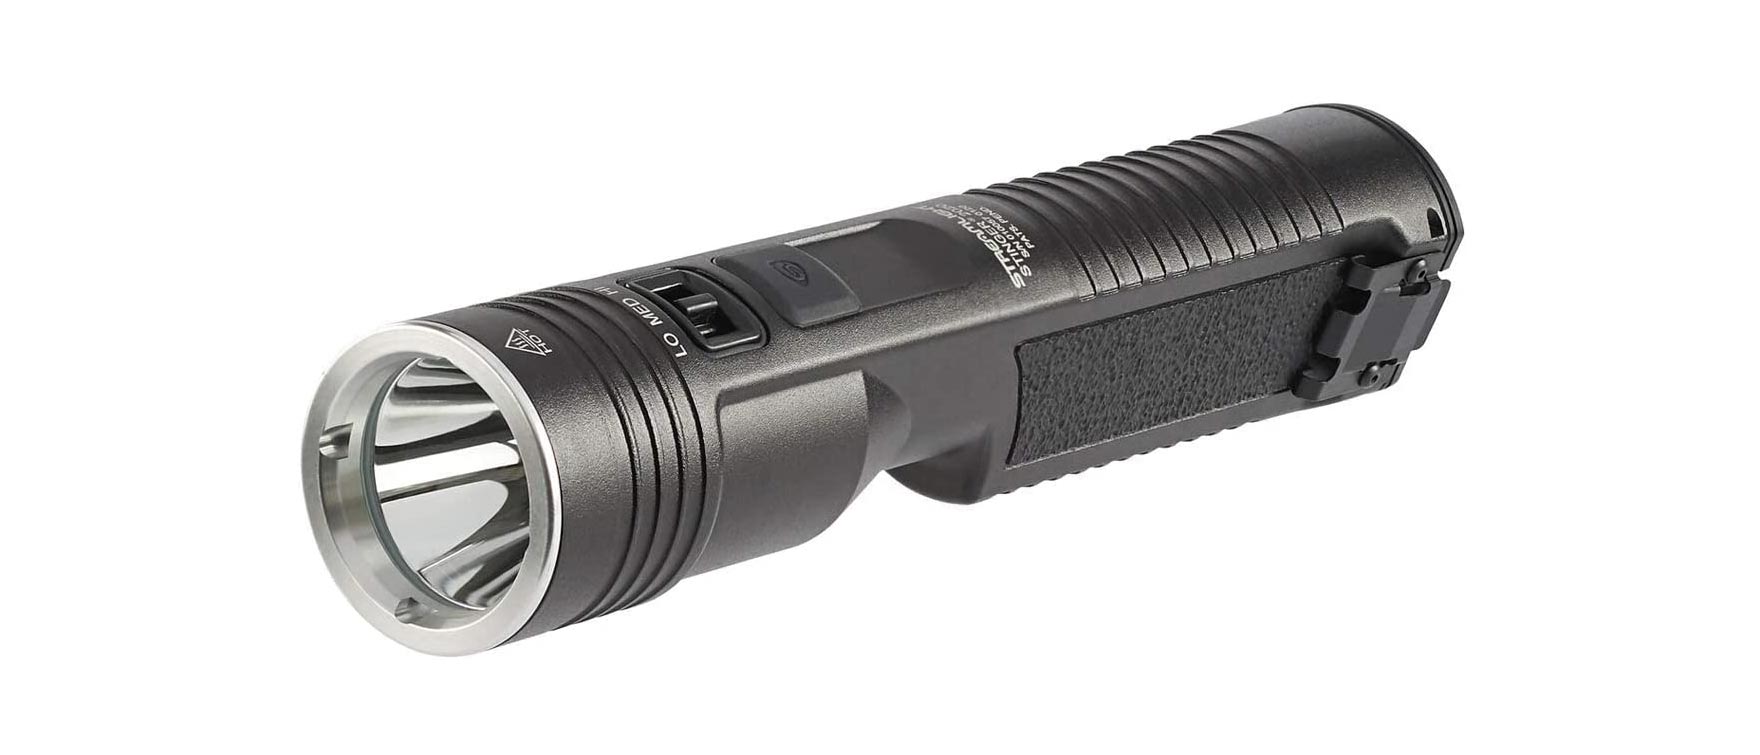 4. Streamlight 78101 Stinger 2020 Rechargeable Flashlight